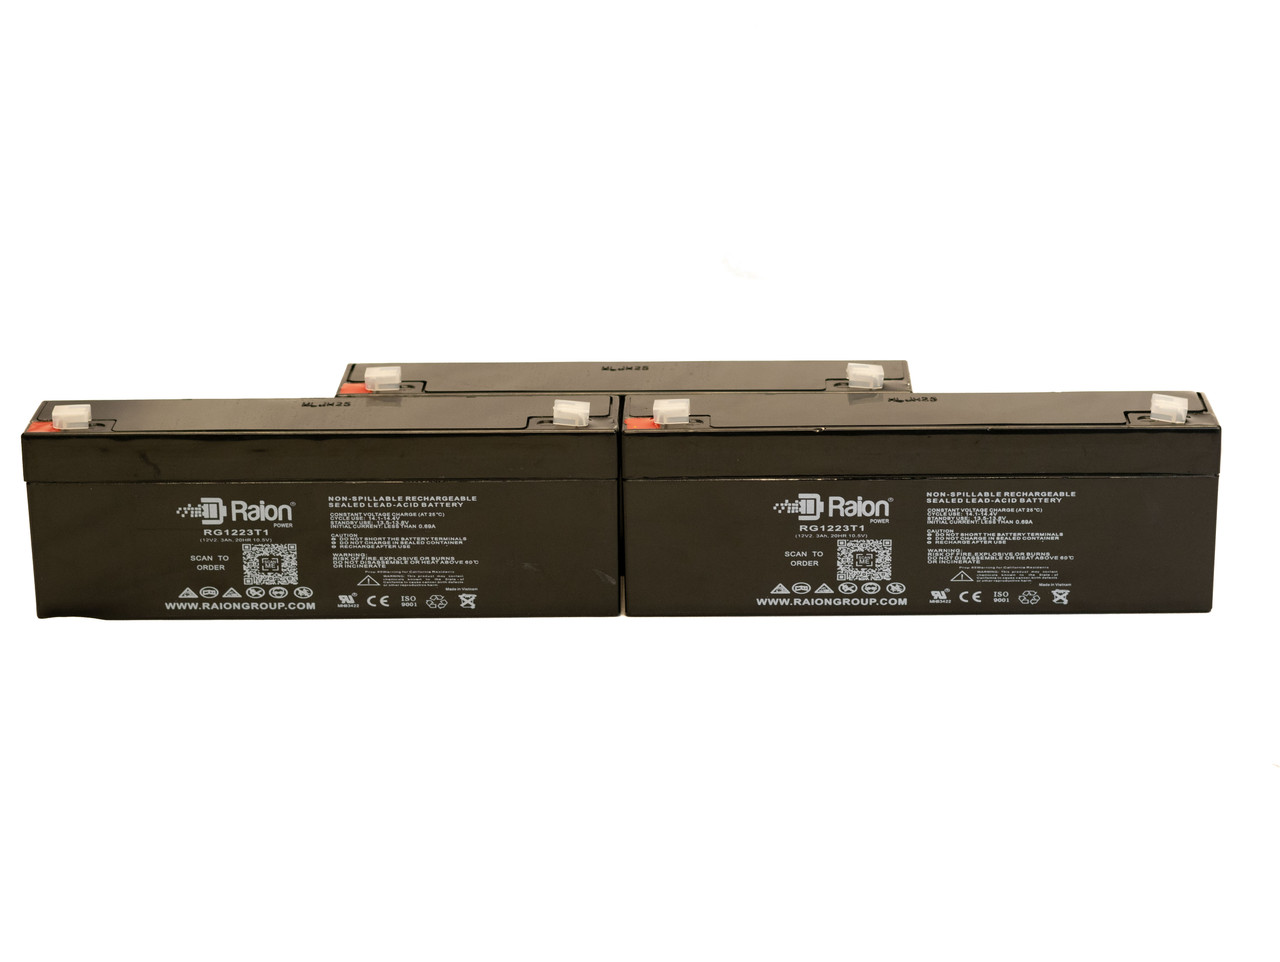 Raion Power 12V 2.3Ah RG1223T1 Replacement Medical Battery for Novametrix 78100 CO2 Monitor - 3 Pack